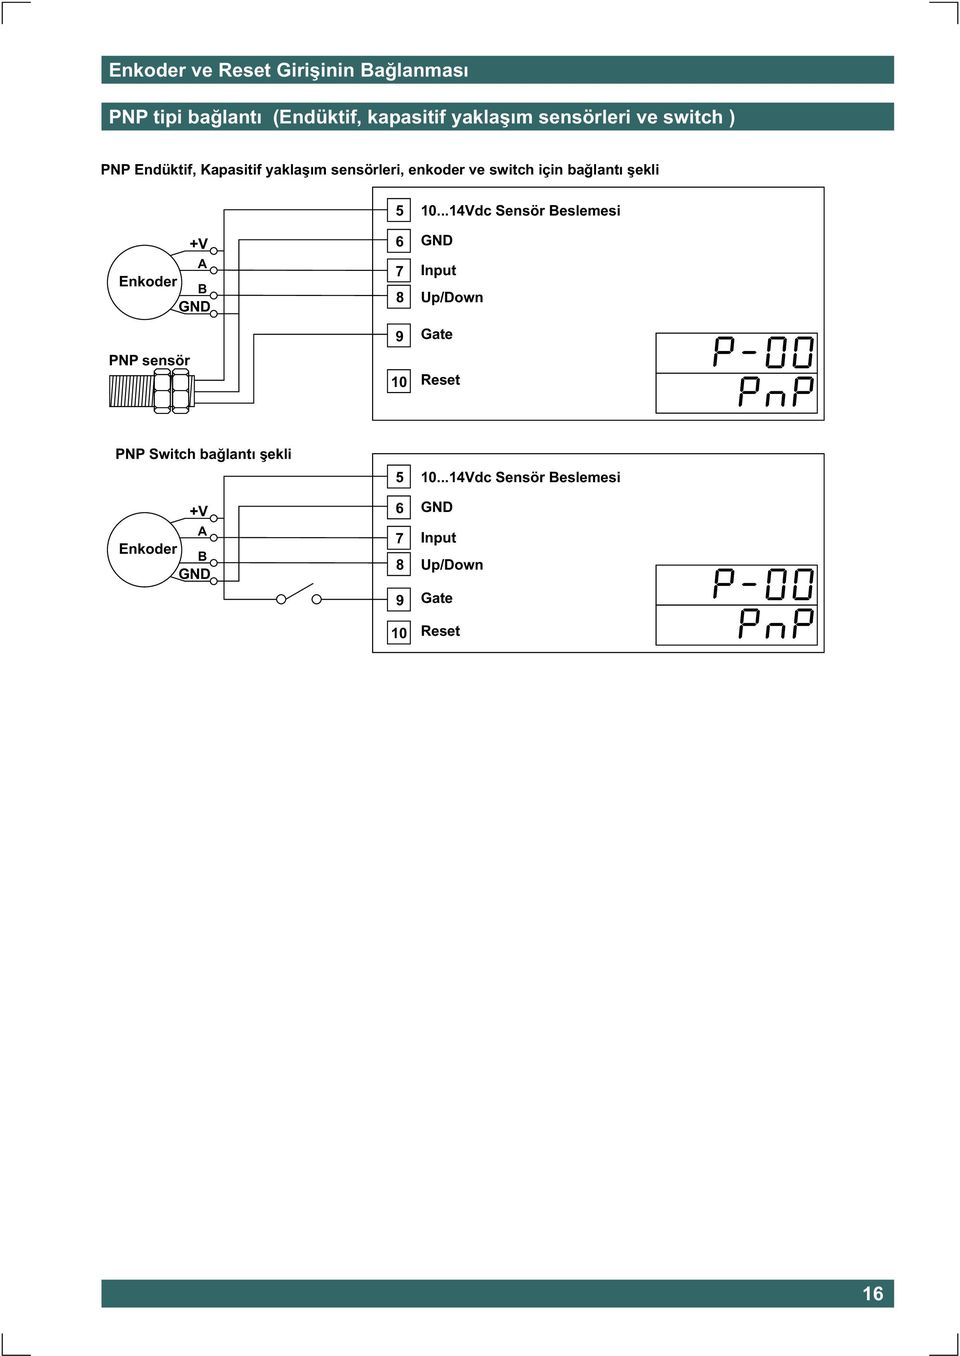 Enkoder B GND PNP sensör 5 6 7 8 9 10 10.